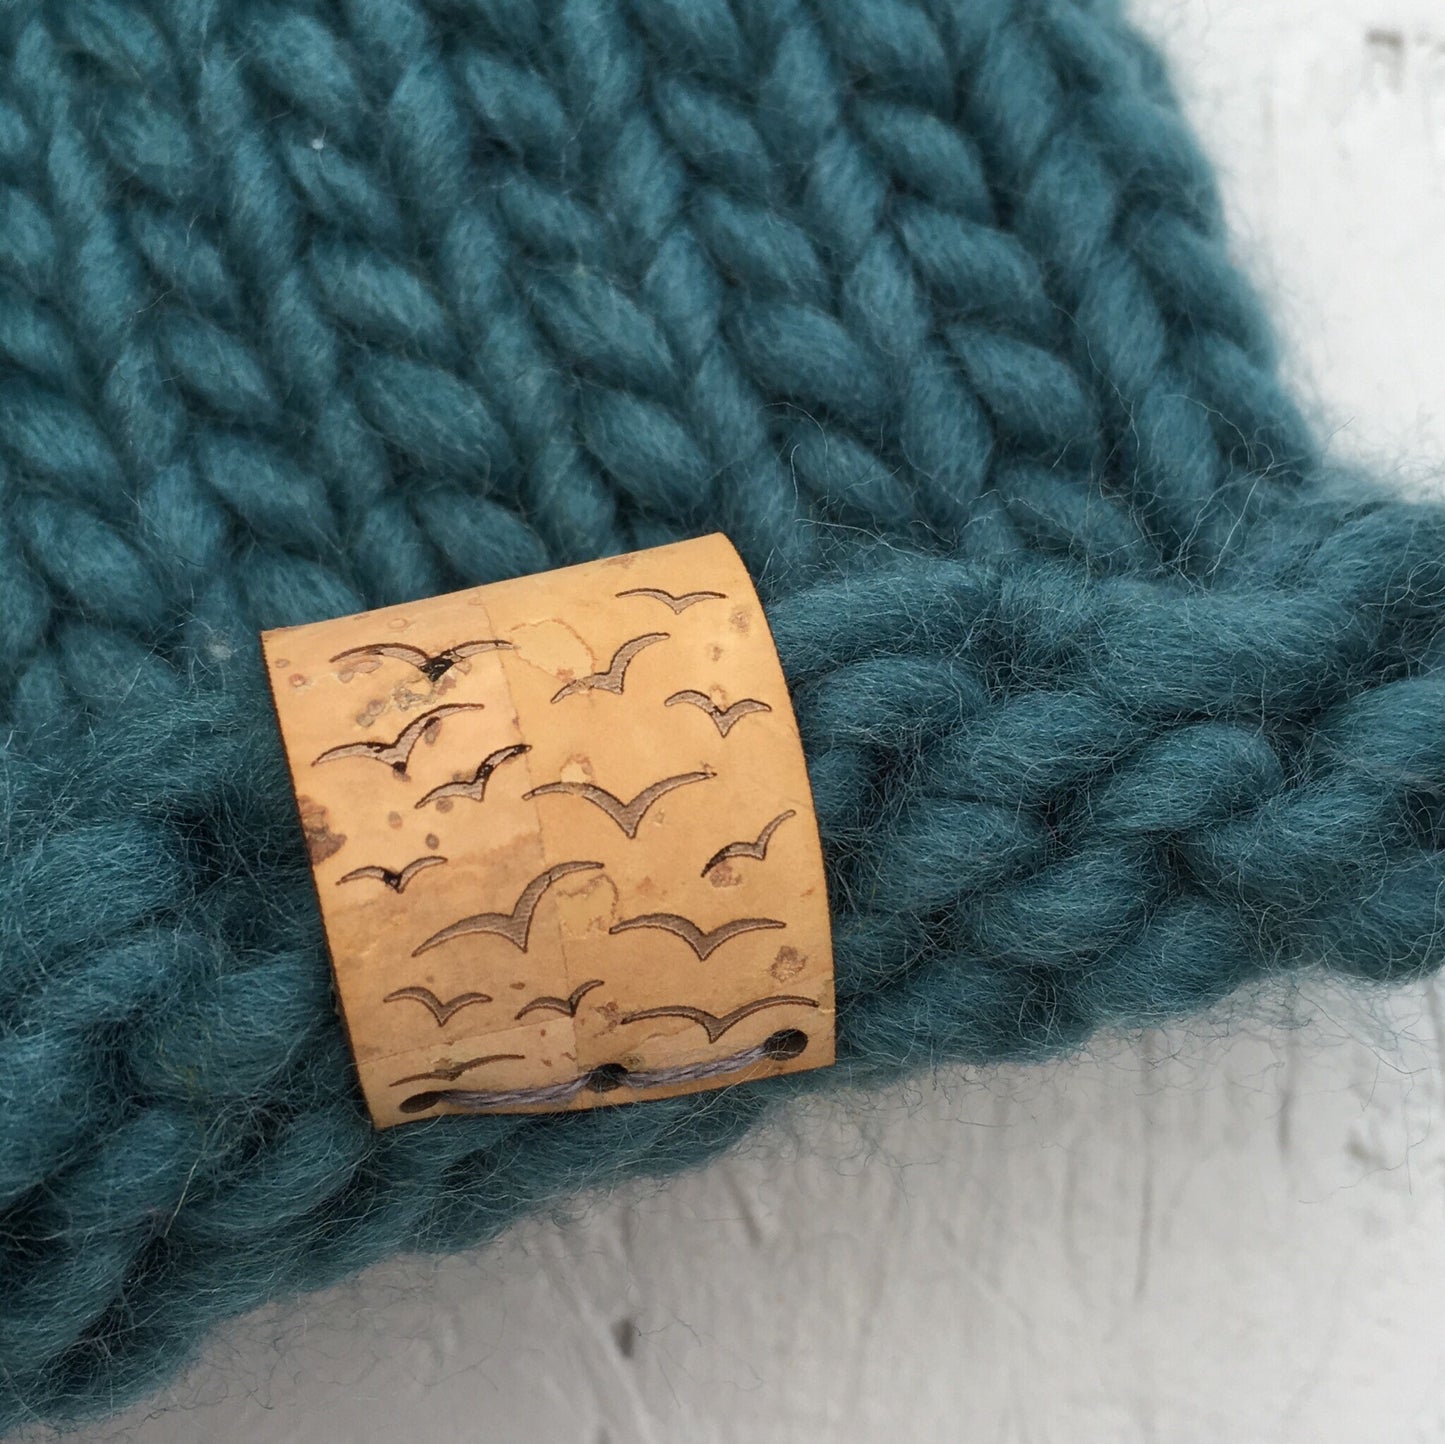 Bobble Hat | adult size | ocean teal | merino wool handknit hat